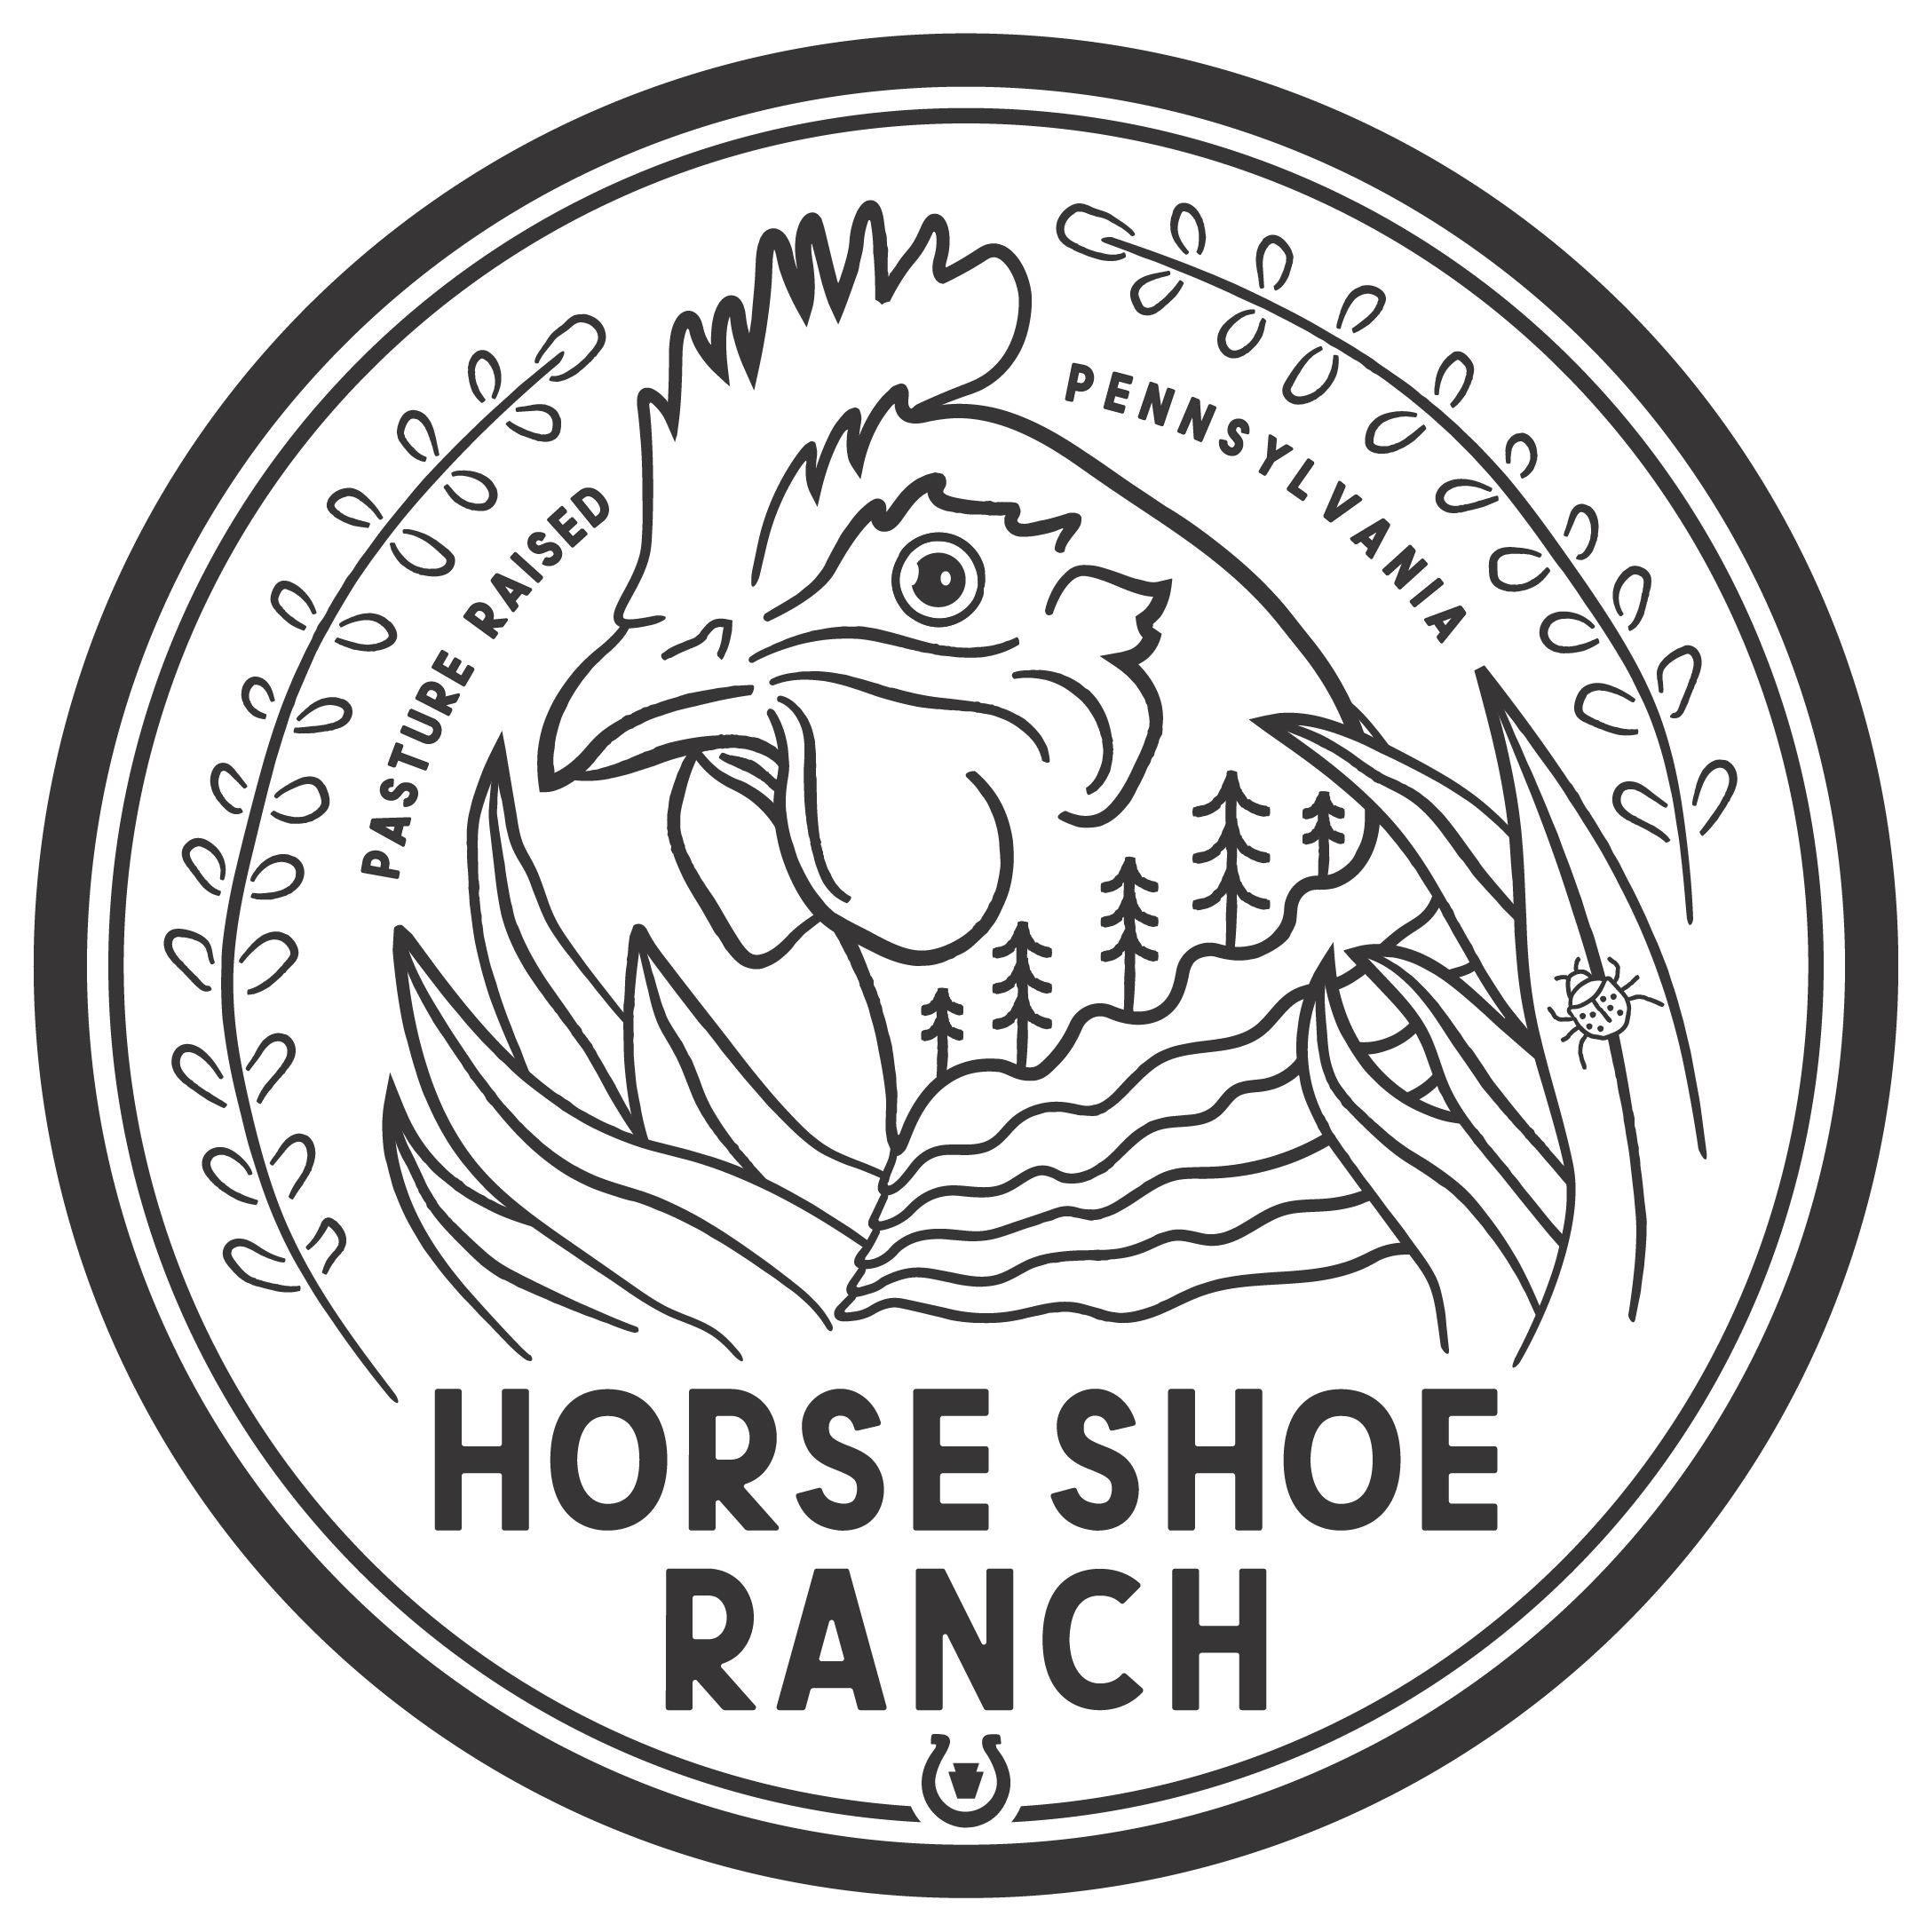 HORSE SHOE RANCH